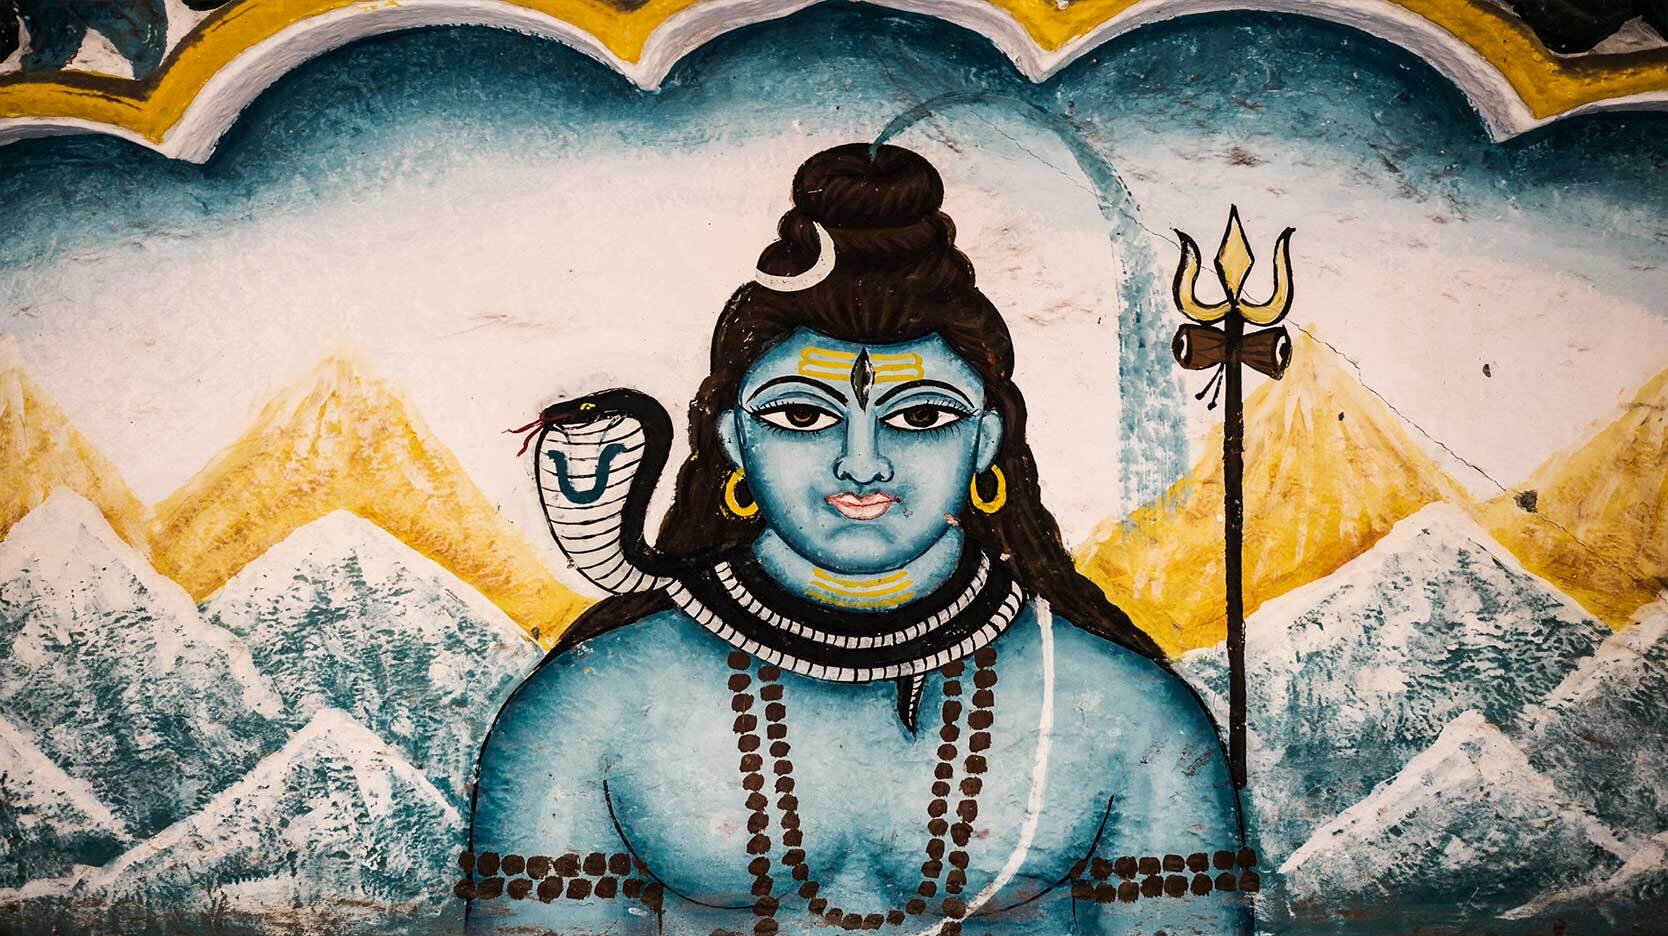 hindu god Vishnu in Jodhpur India painting